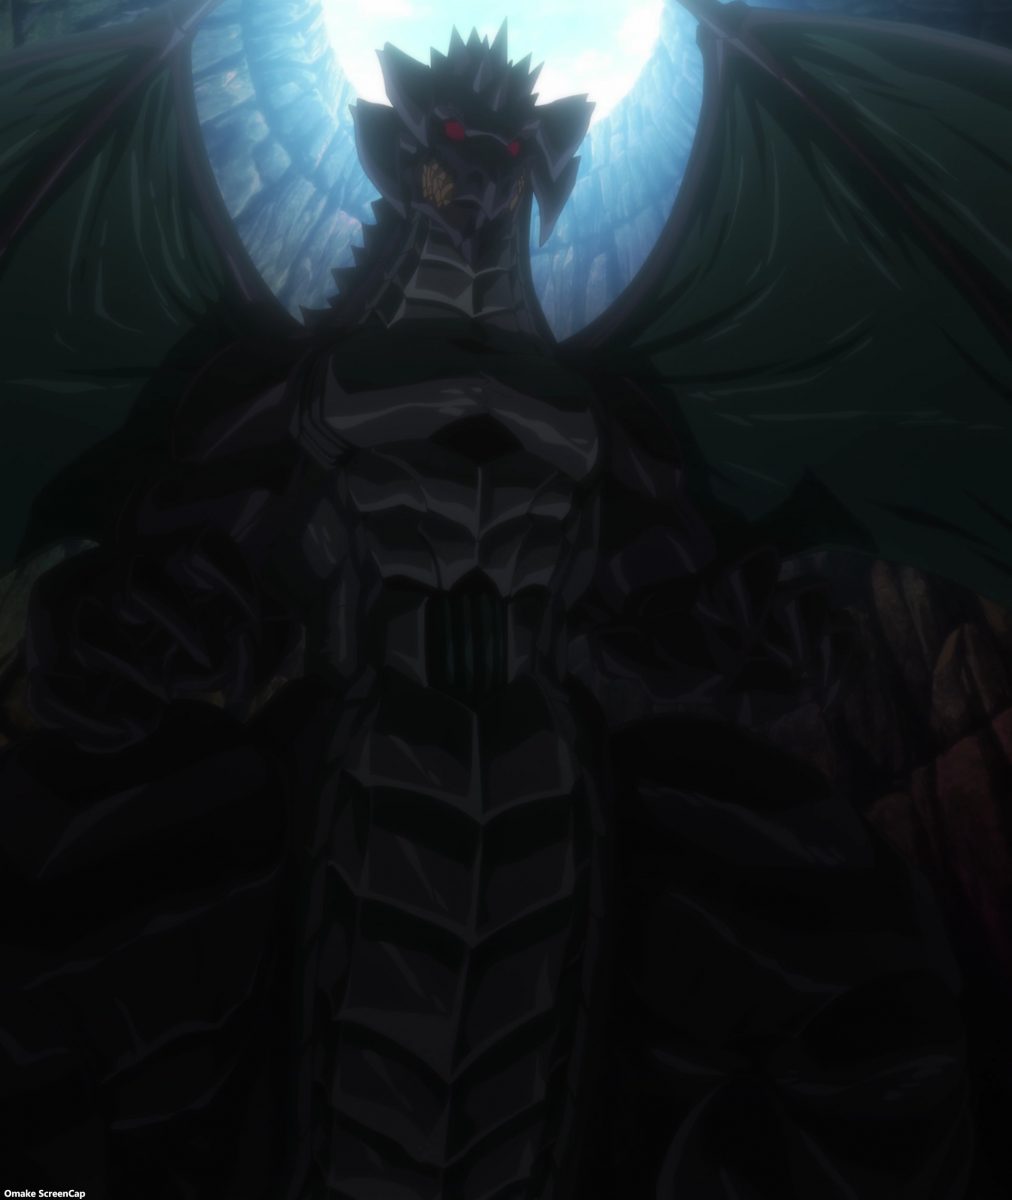 Isekai Maou S2 Episode 5 Black Dragon Looks Down